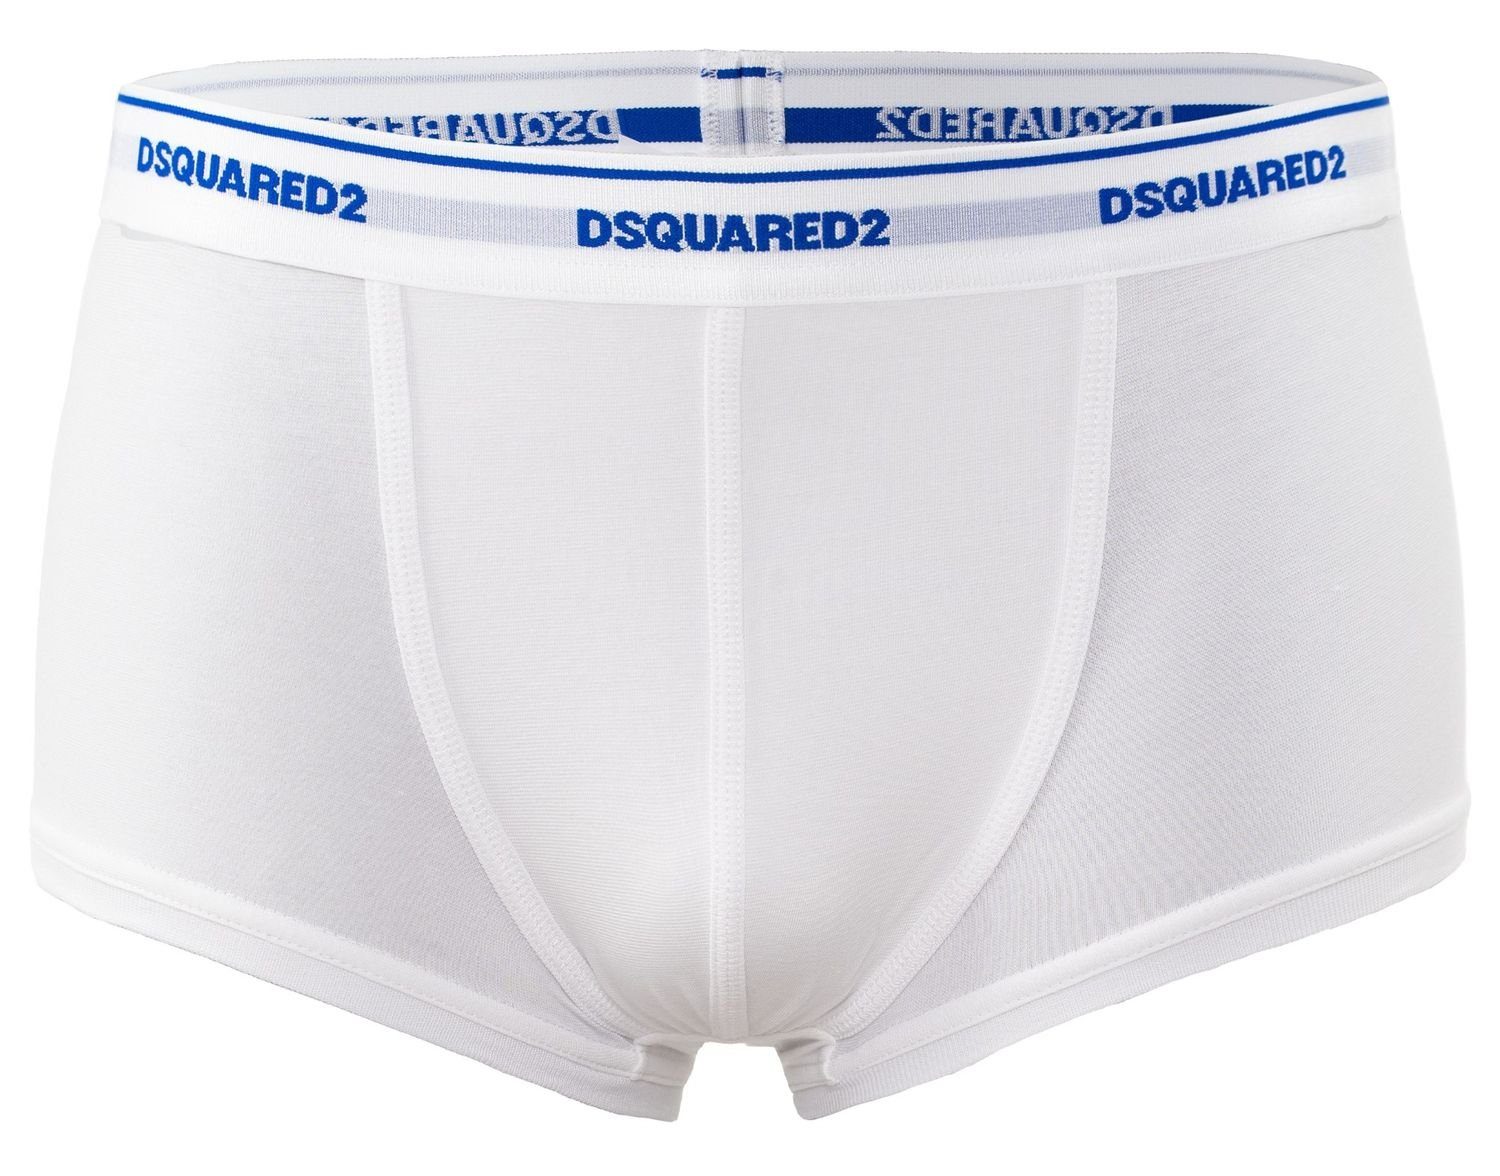 XXL Dsquared2 (1-St) / / / Pants Dsquared2 in Boxershorts L Boxer Shorts Größe / M / S / / weiß Trunk XL